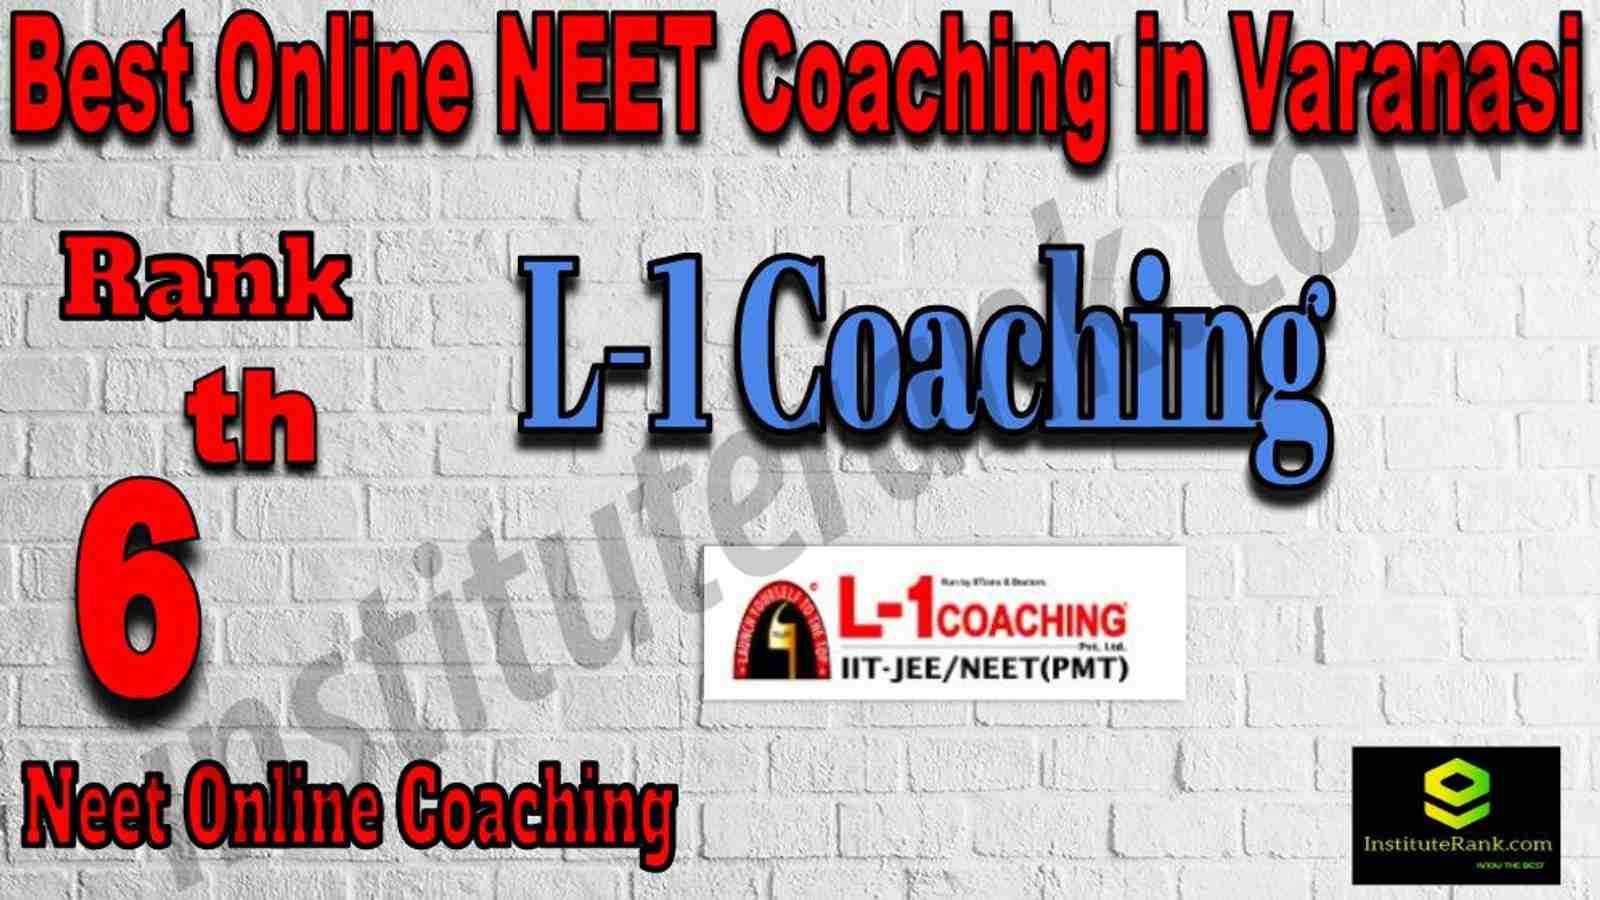 6th Best Online Neet Coaching in Varanasi